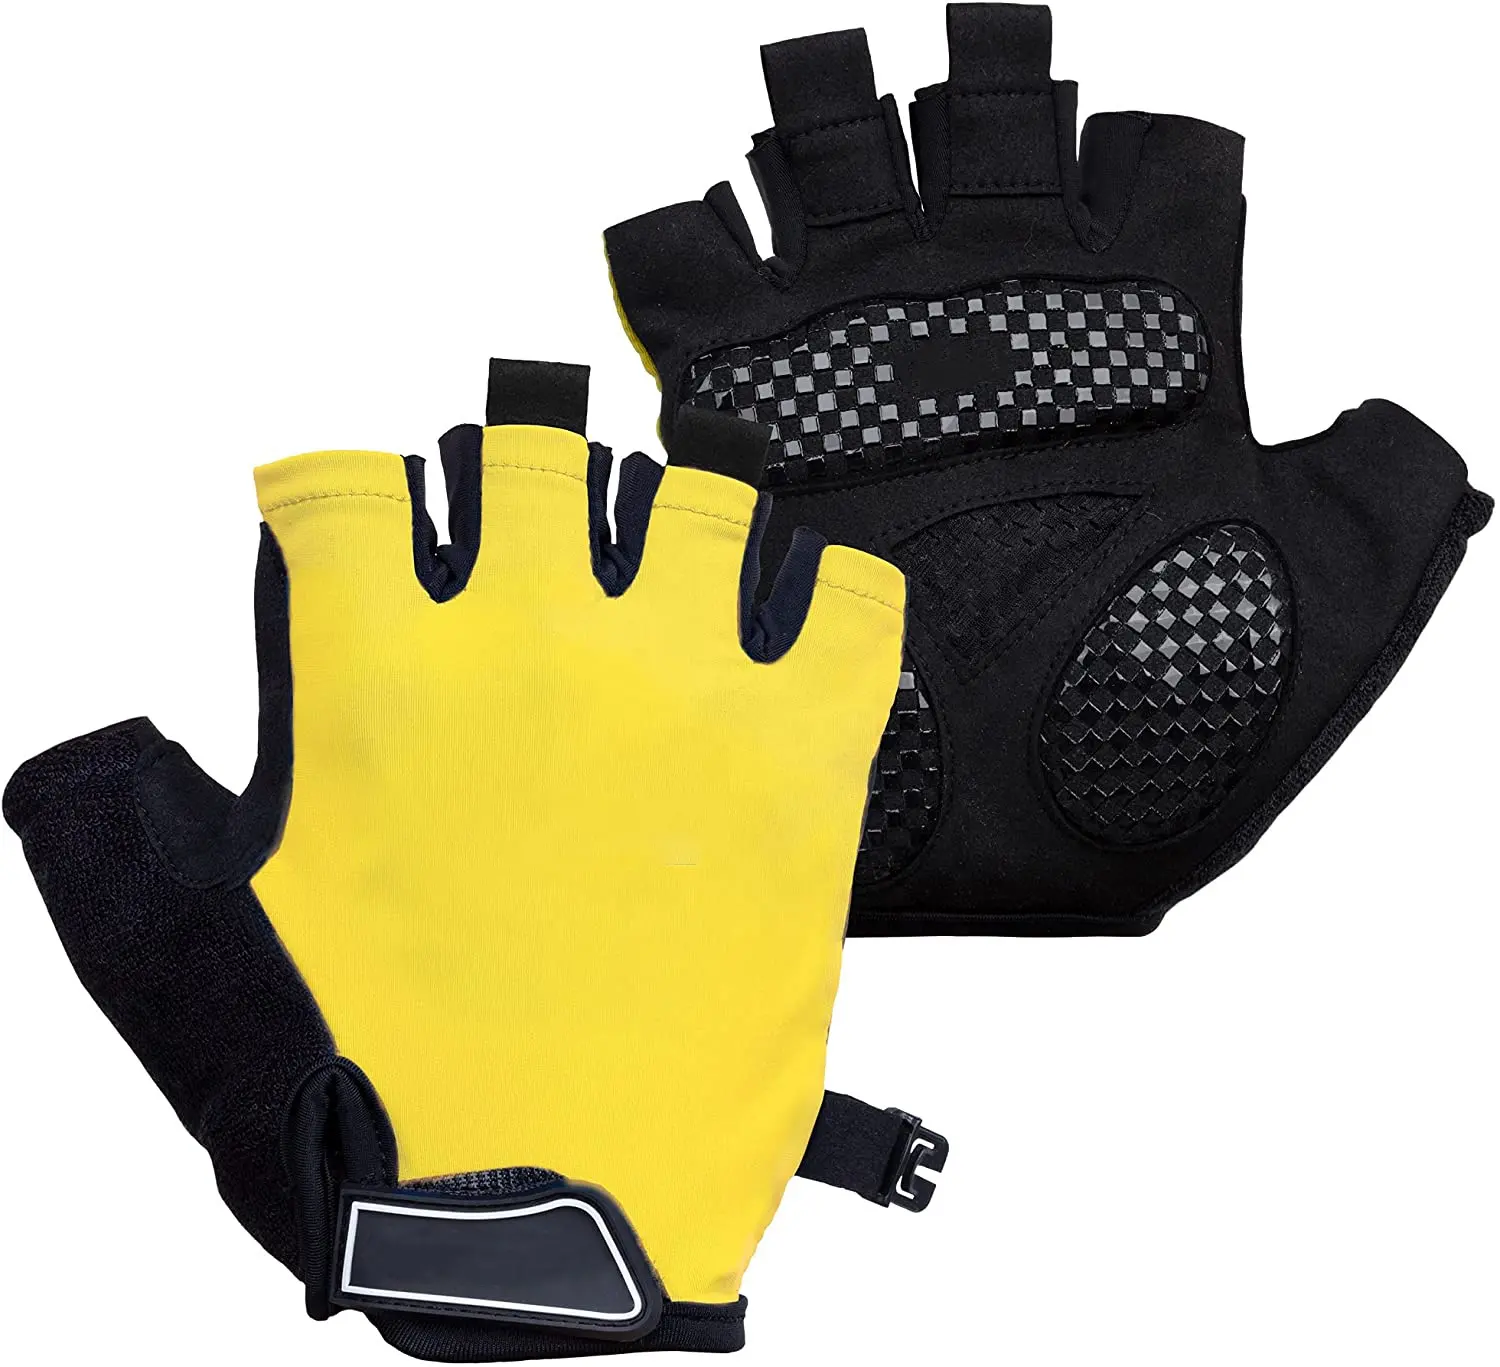 Cycling Gloves Half Finger Bike Gloves for Men Women with Gel Pad Shock Absorbing Breathable Road Biking Gloves